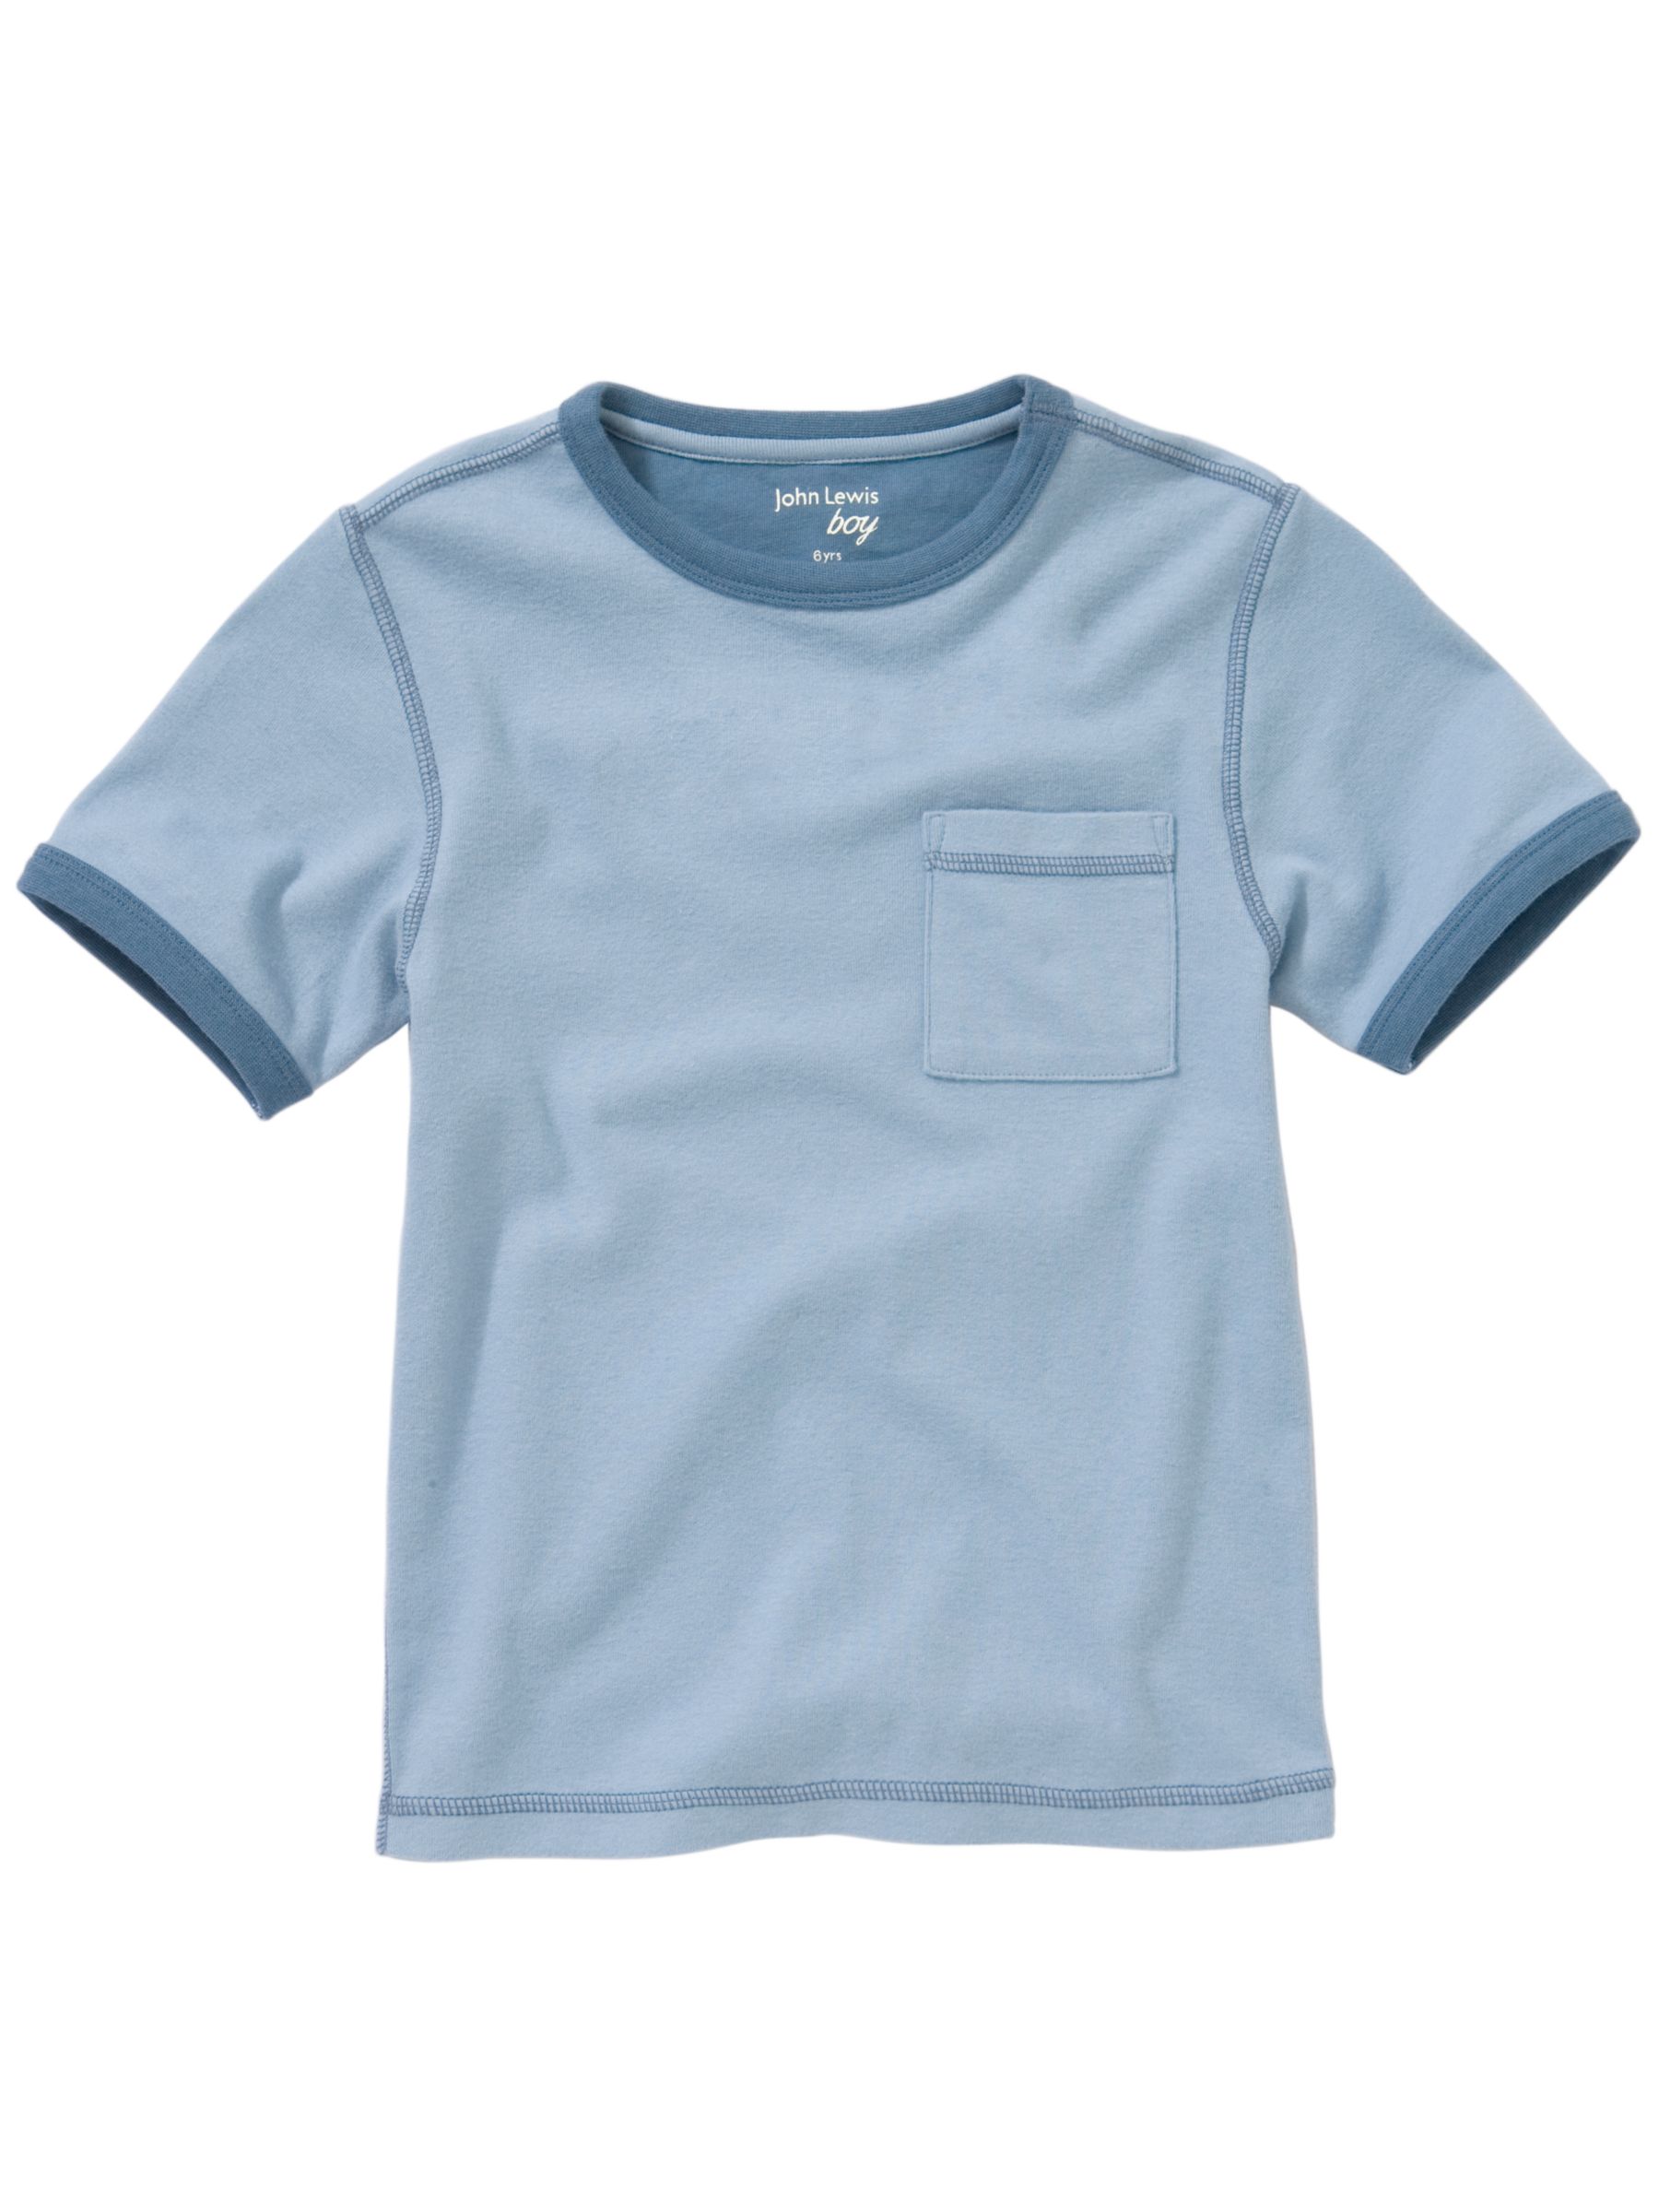 John Lewis Boy Short Sleeve T-Shirt, Blue, 8 years